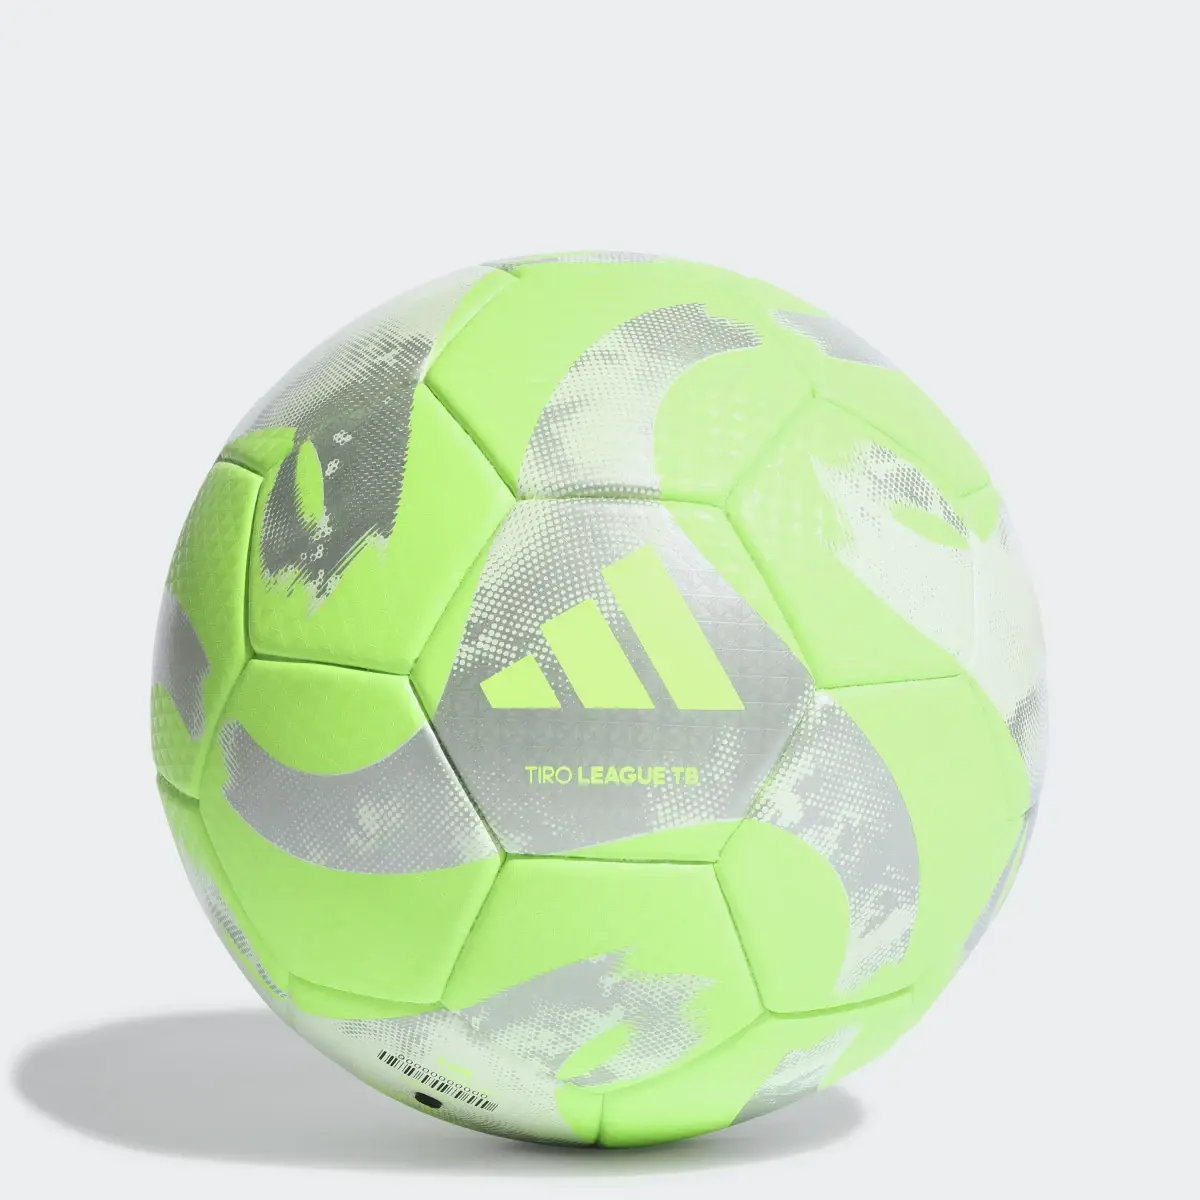 Adidas Tiro League Thermally Bonded Ball. 1